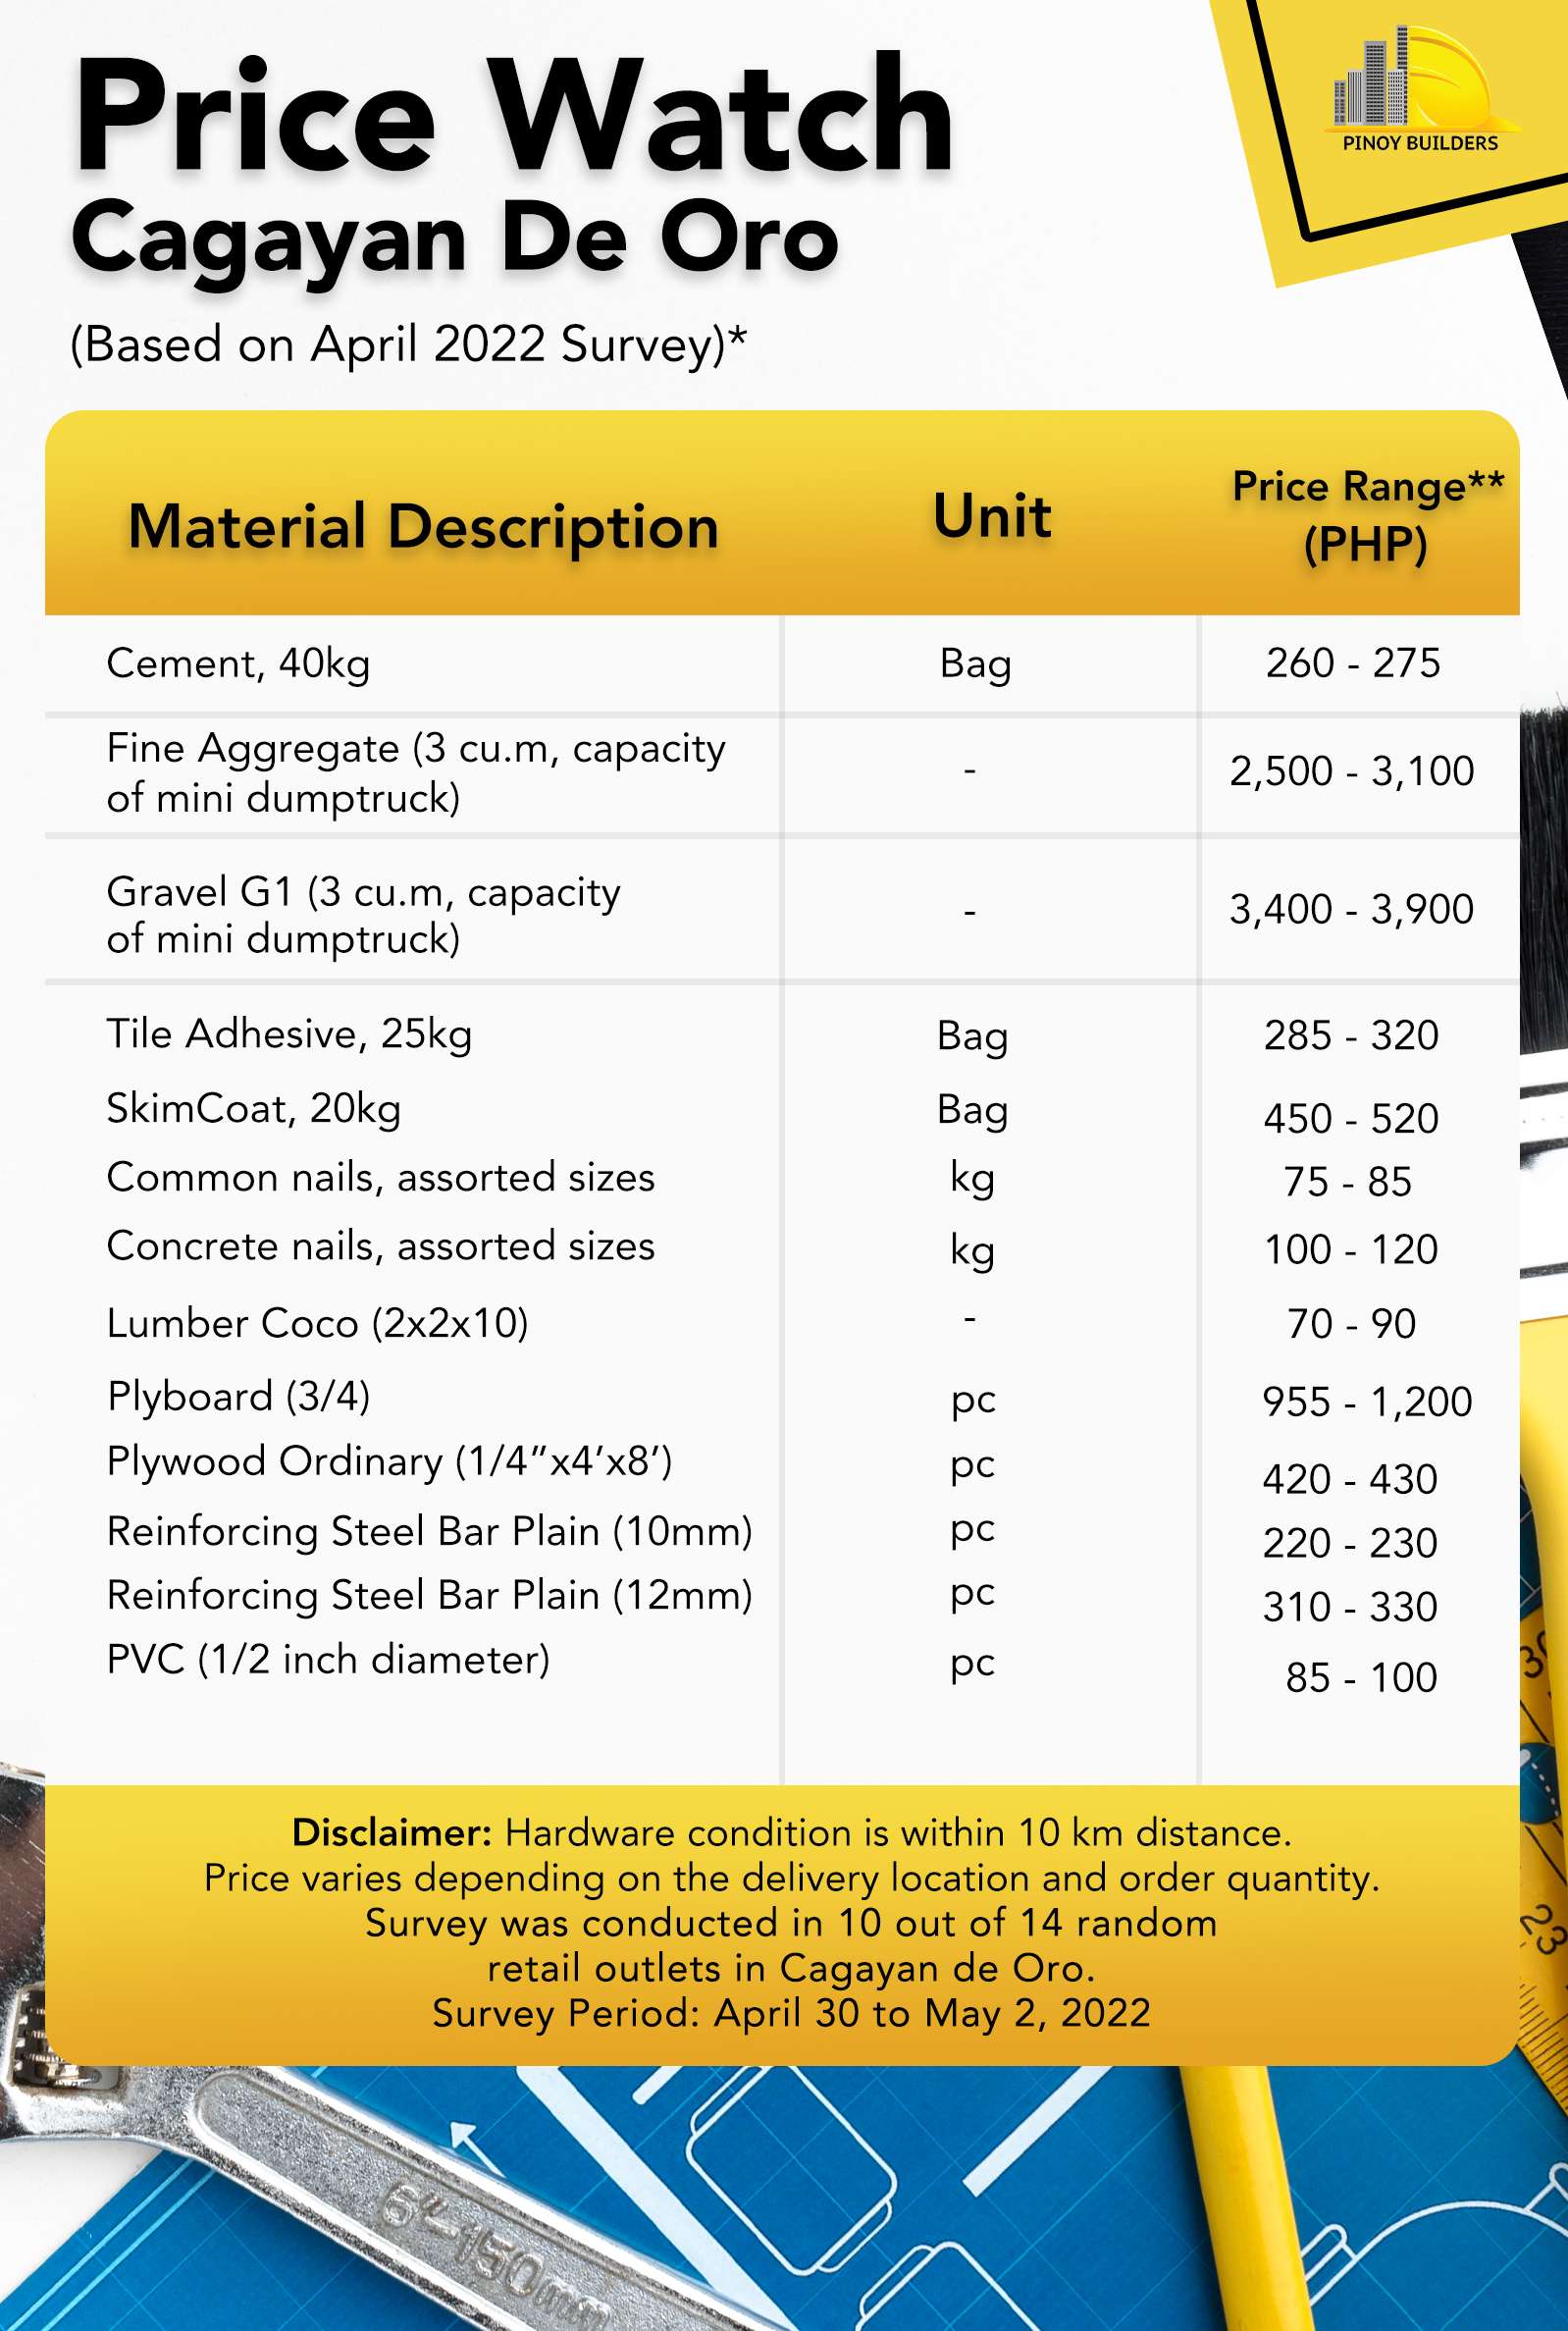 Price Watch (Cagayan De Oro) Basic Construction Materials (April